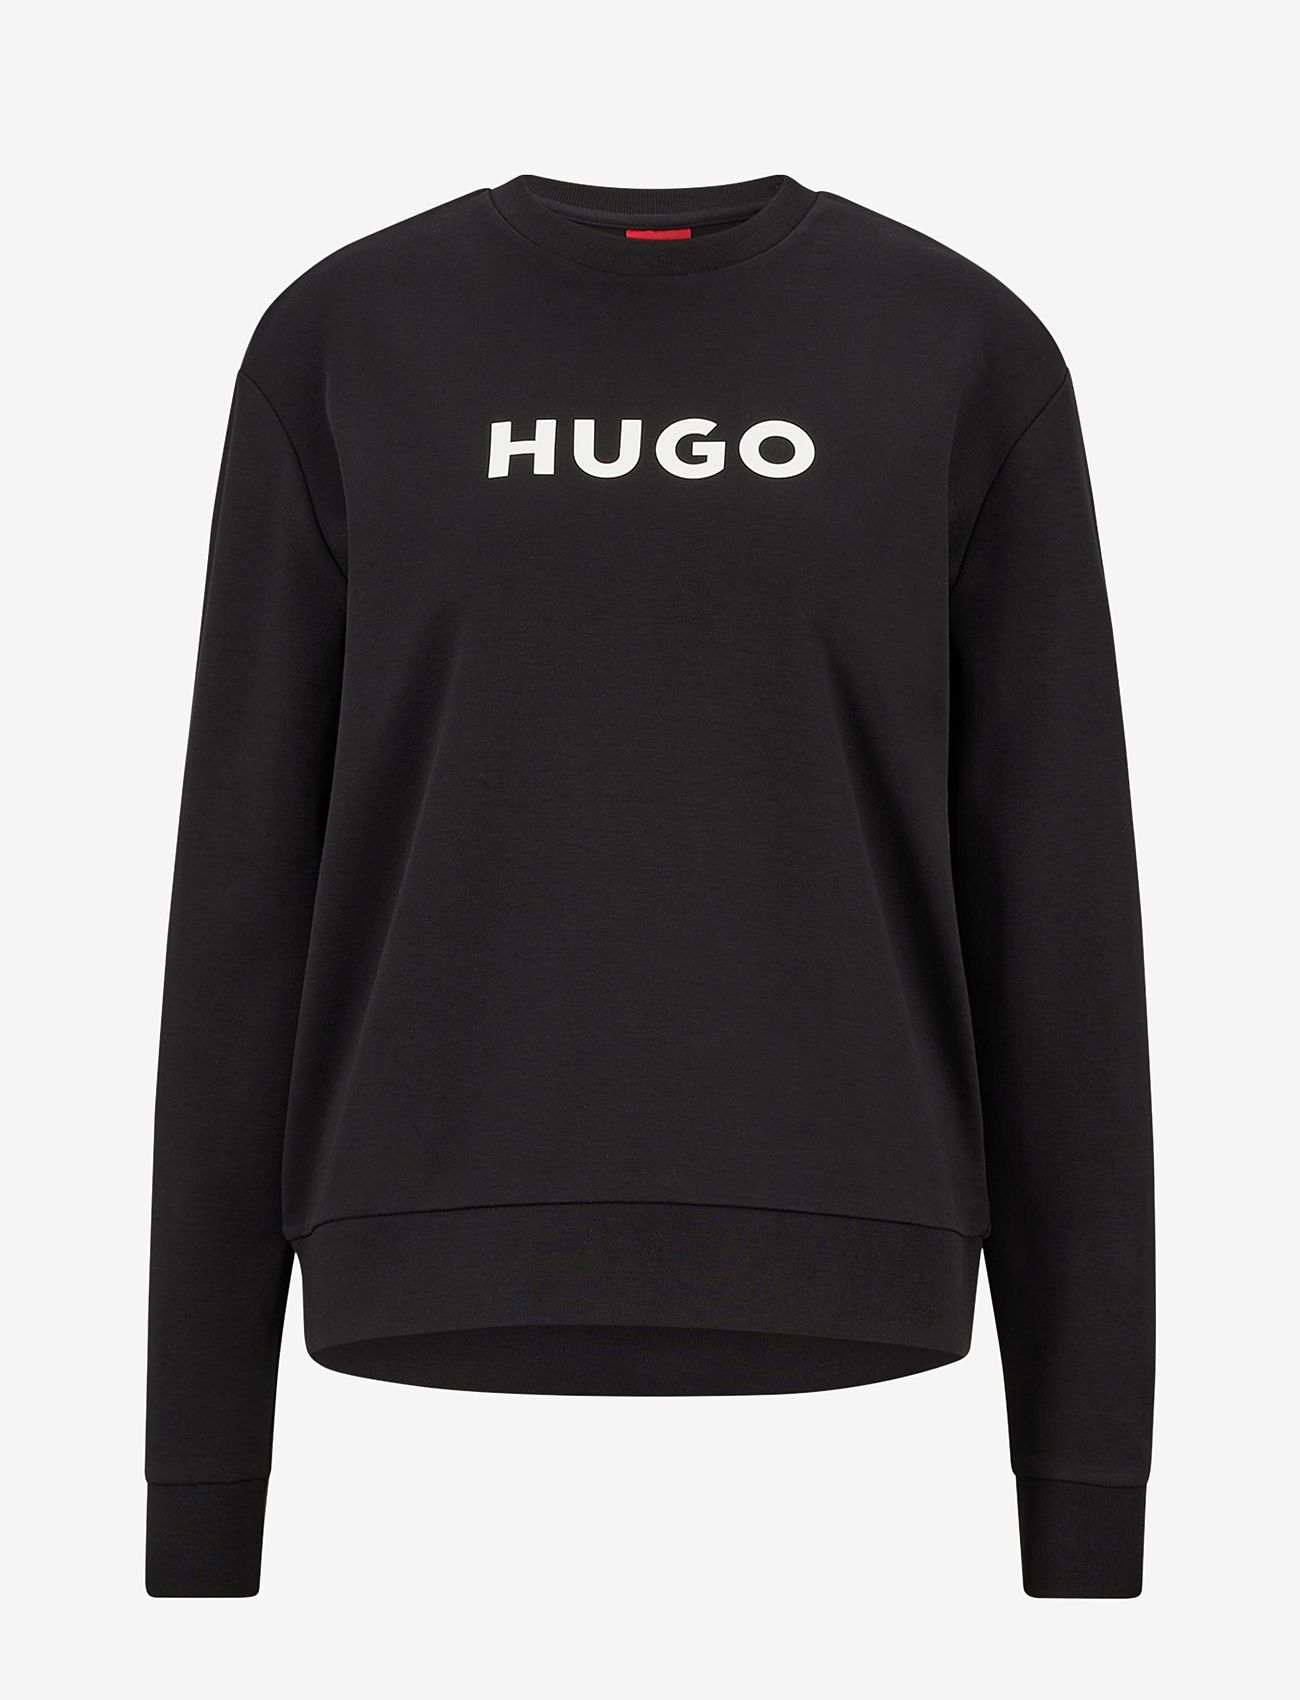 HUGO - The HUGO Sweater - naised - black - 0